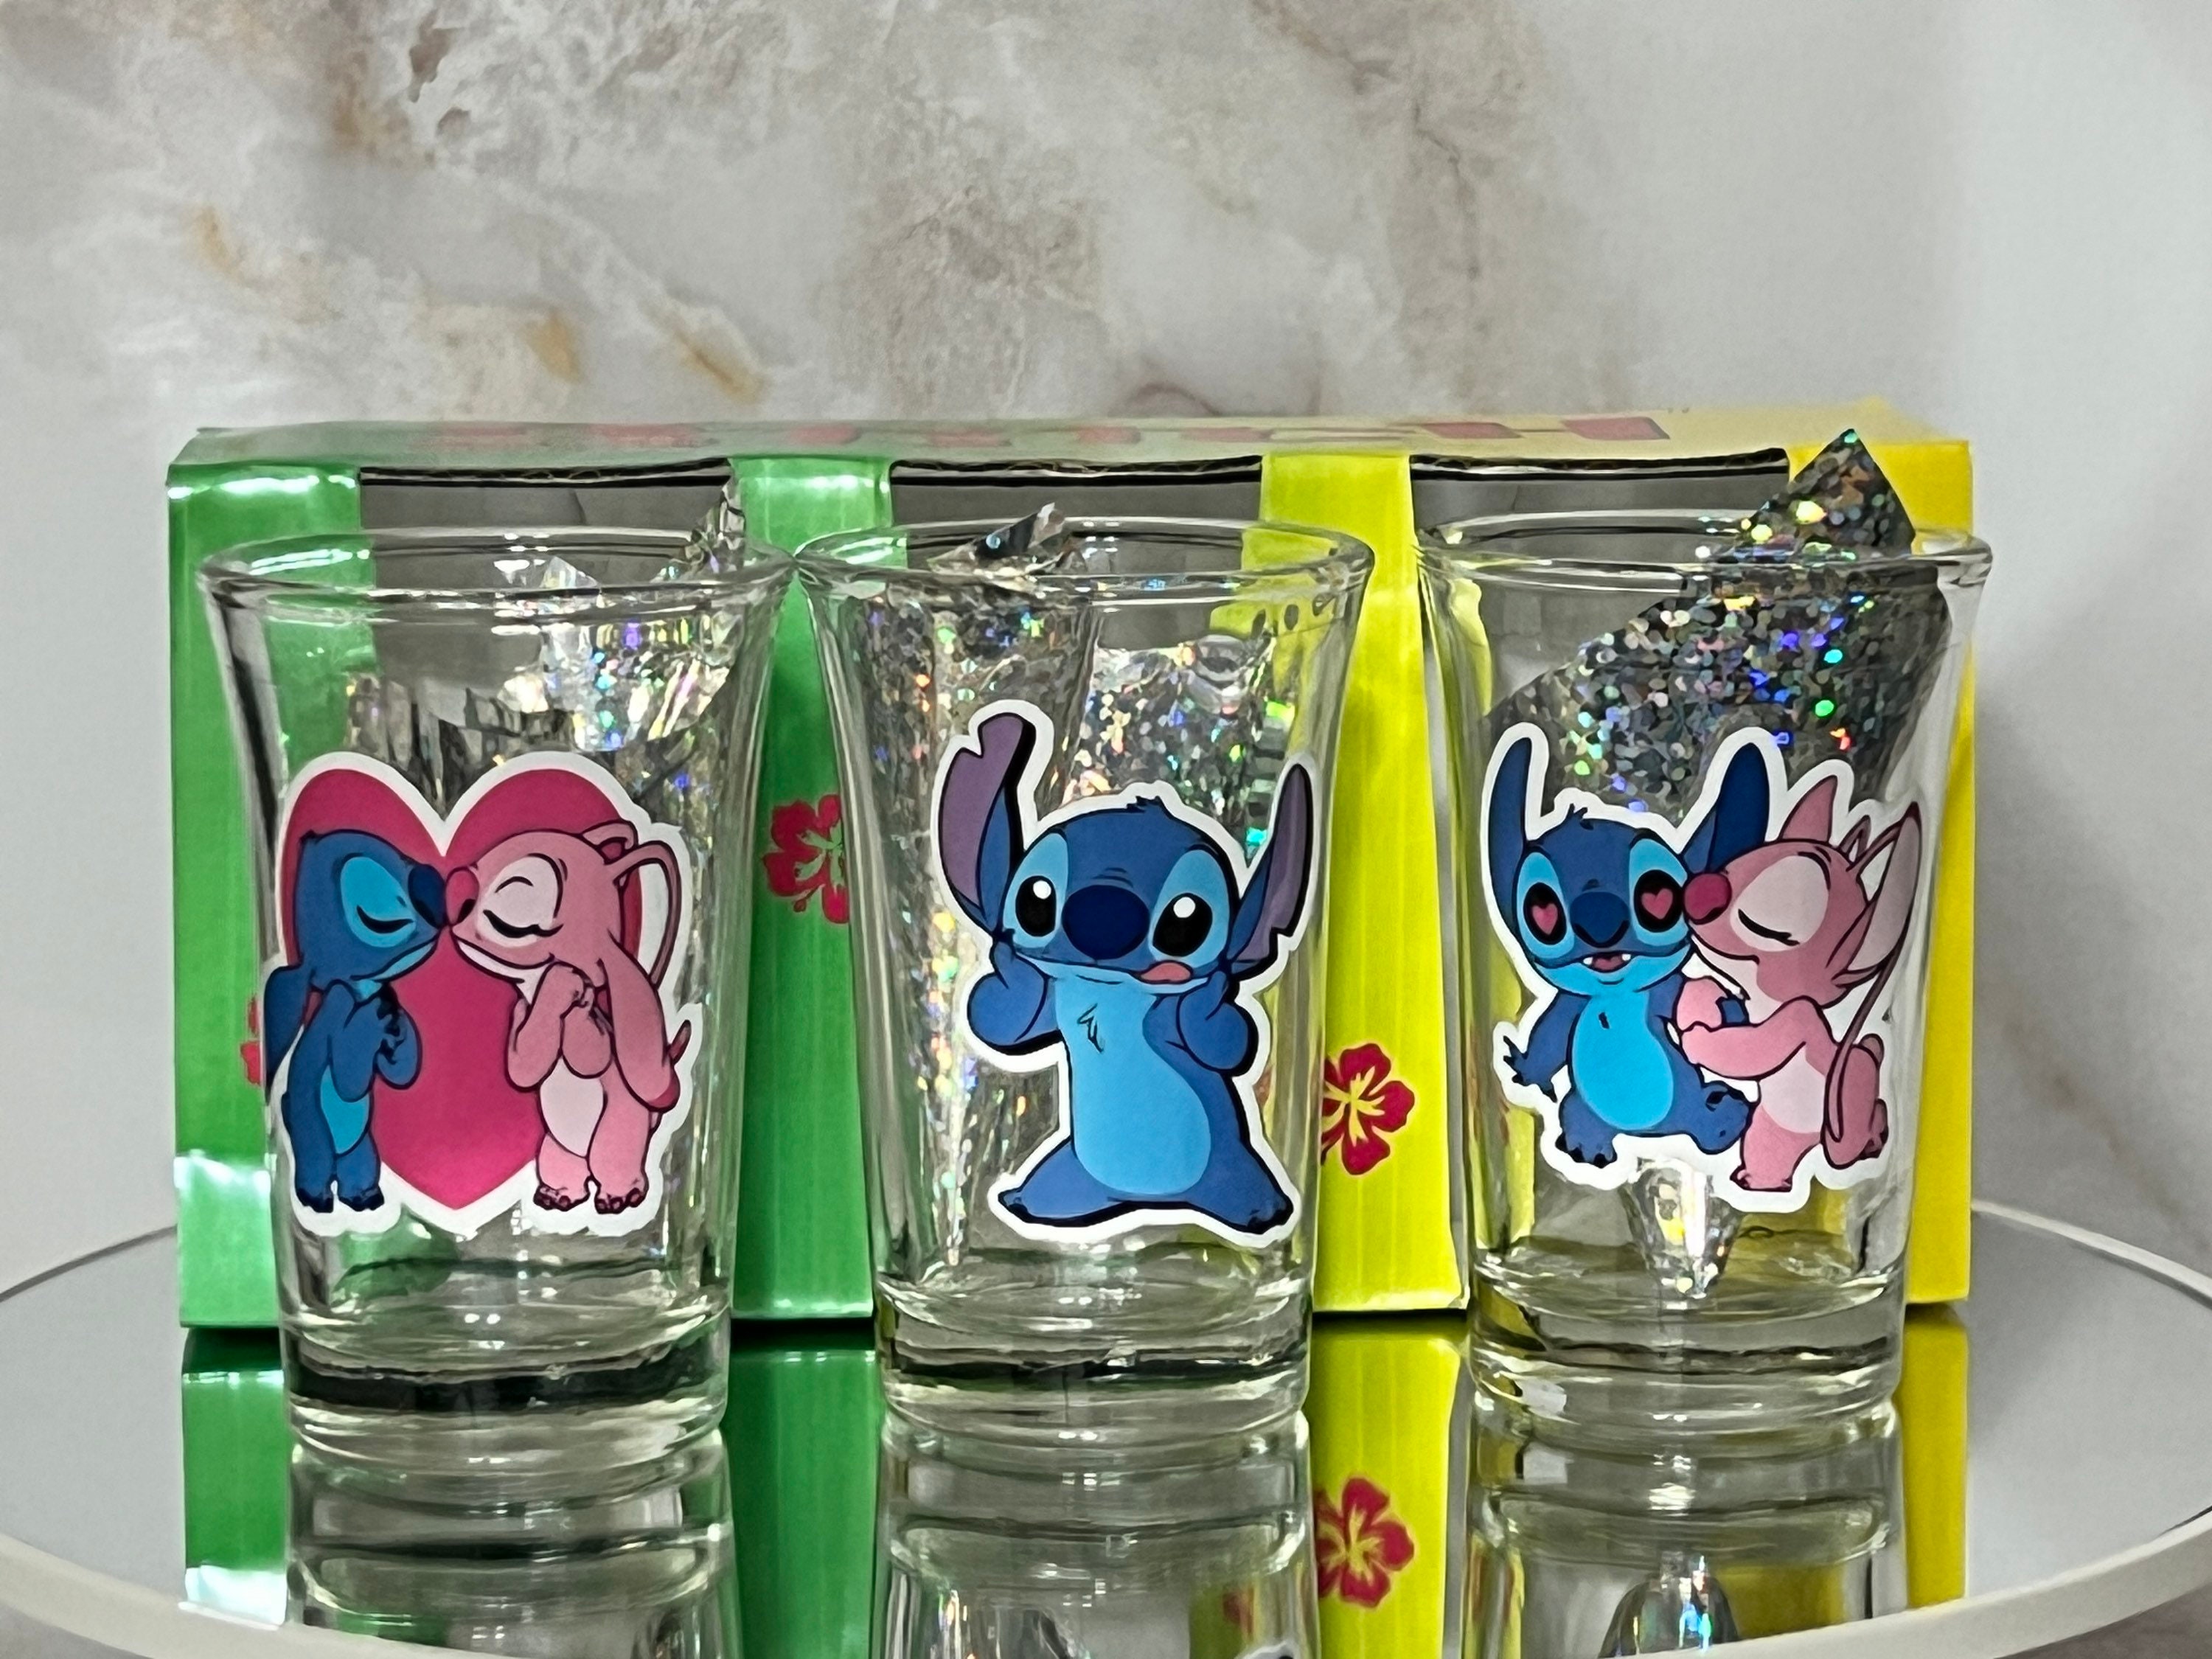 Disney Sitting Stitch Alien Shot Glass, Disney Themed Adult Drinking Glasses,  Disney Vacation Souvenirs for Men